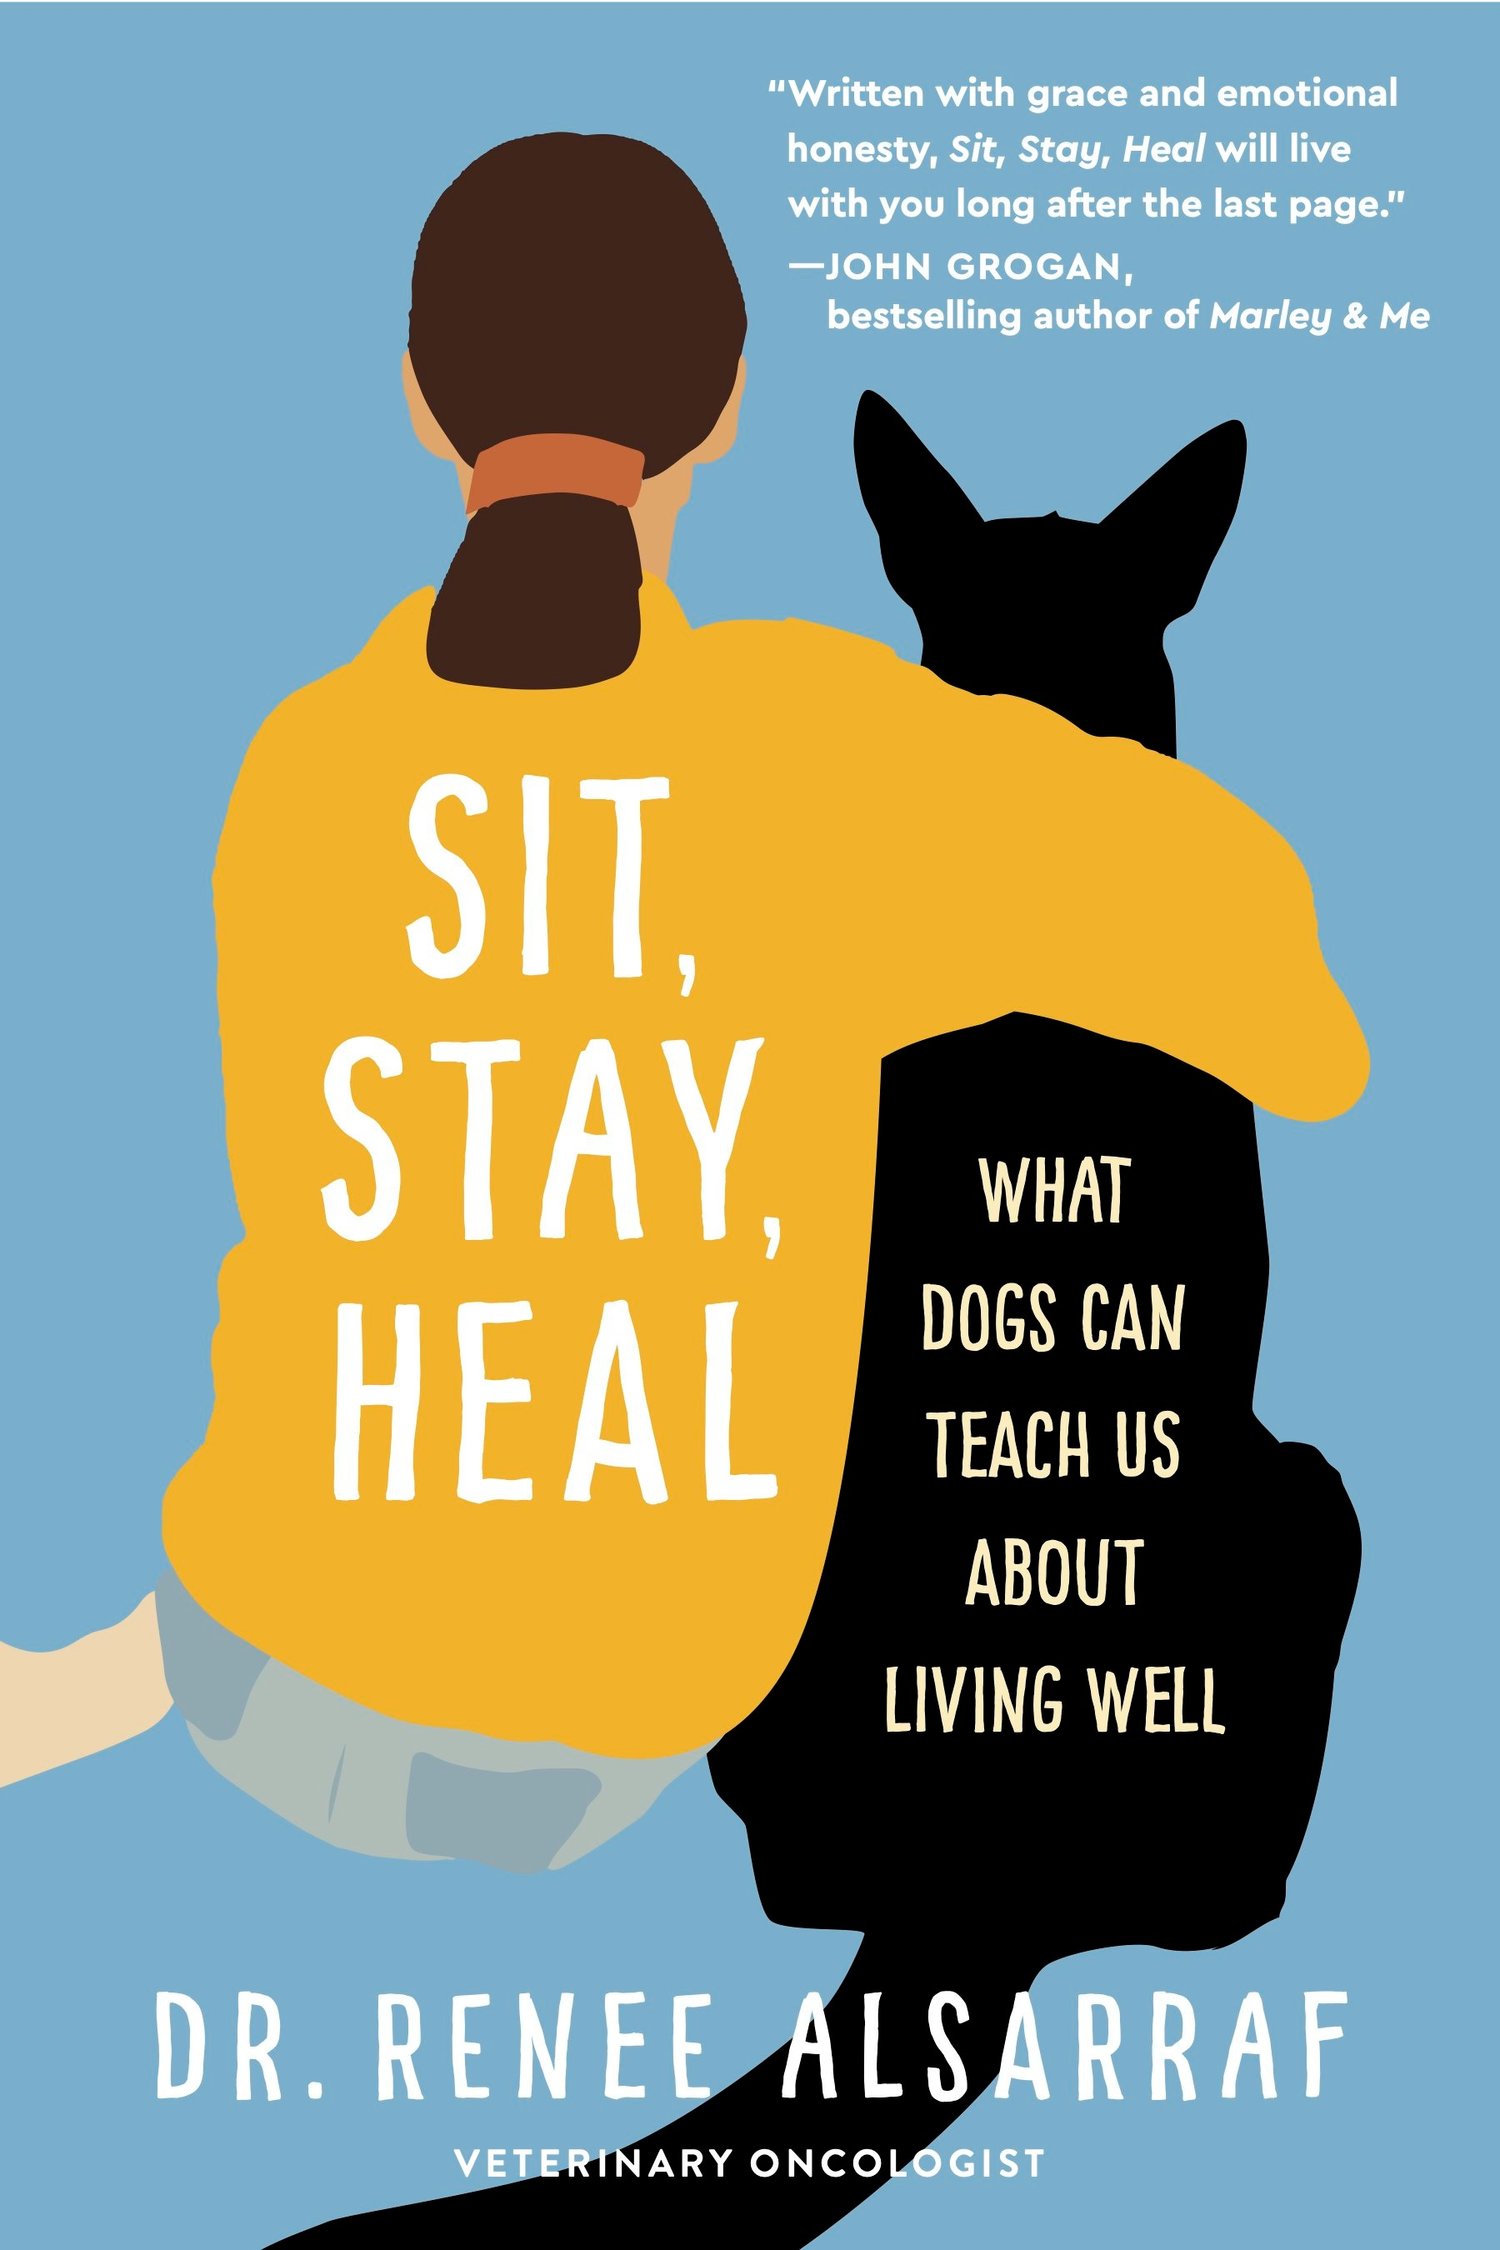 SIT STAY HEAL by Dr. Renee Alsarraf